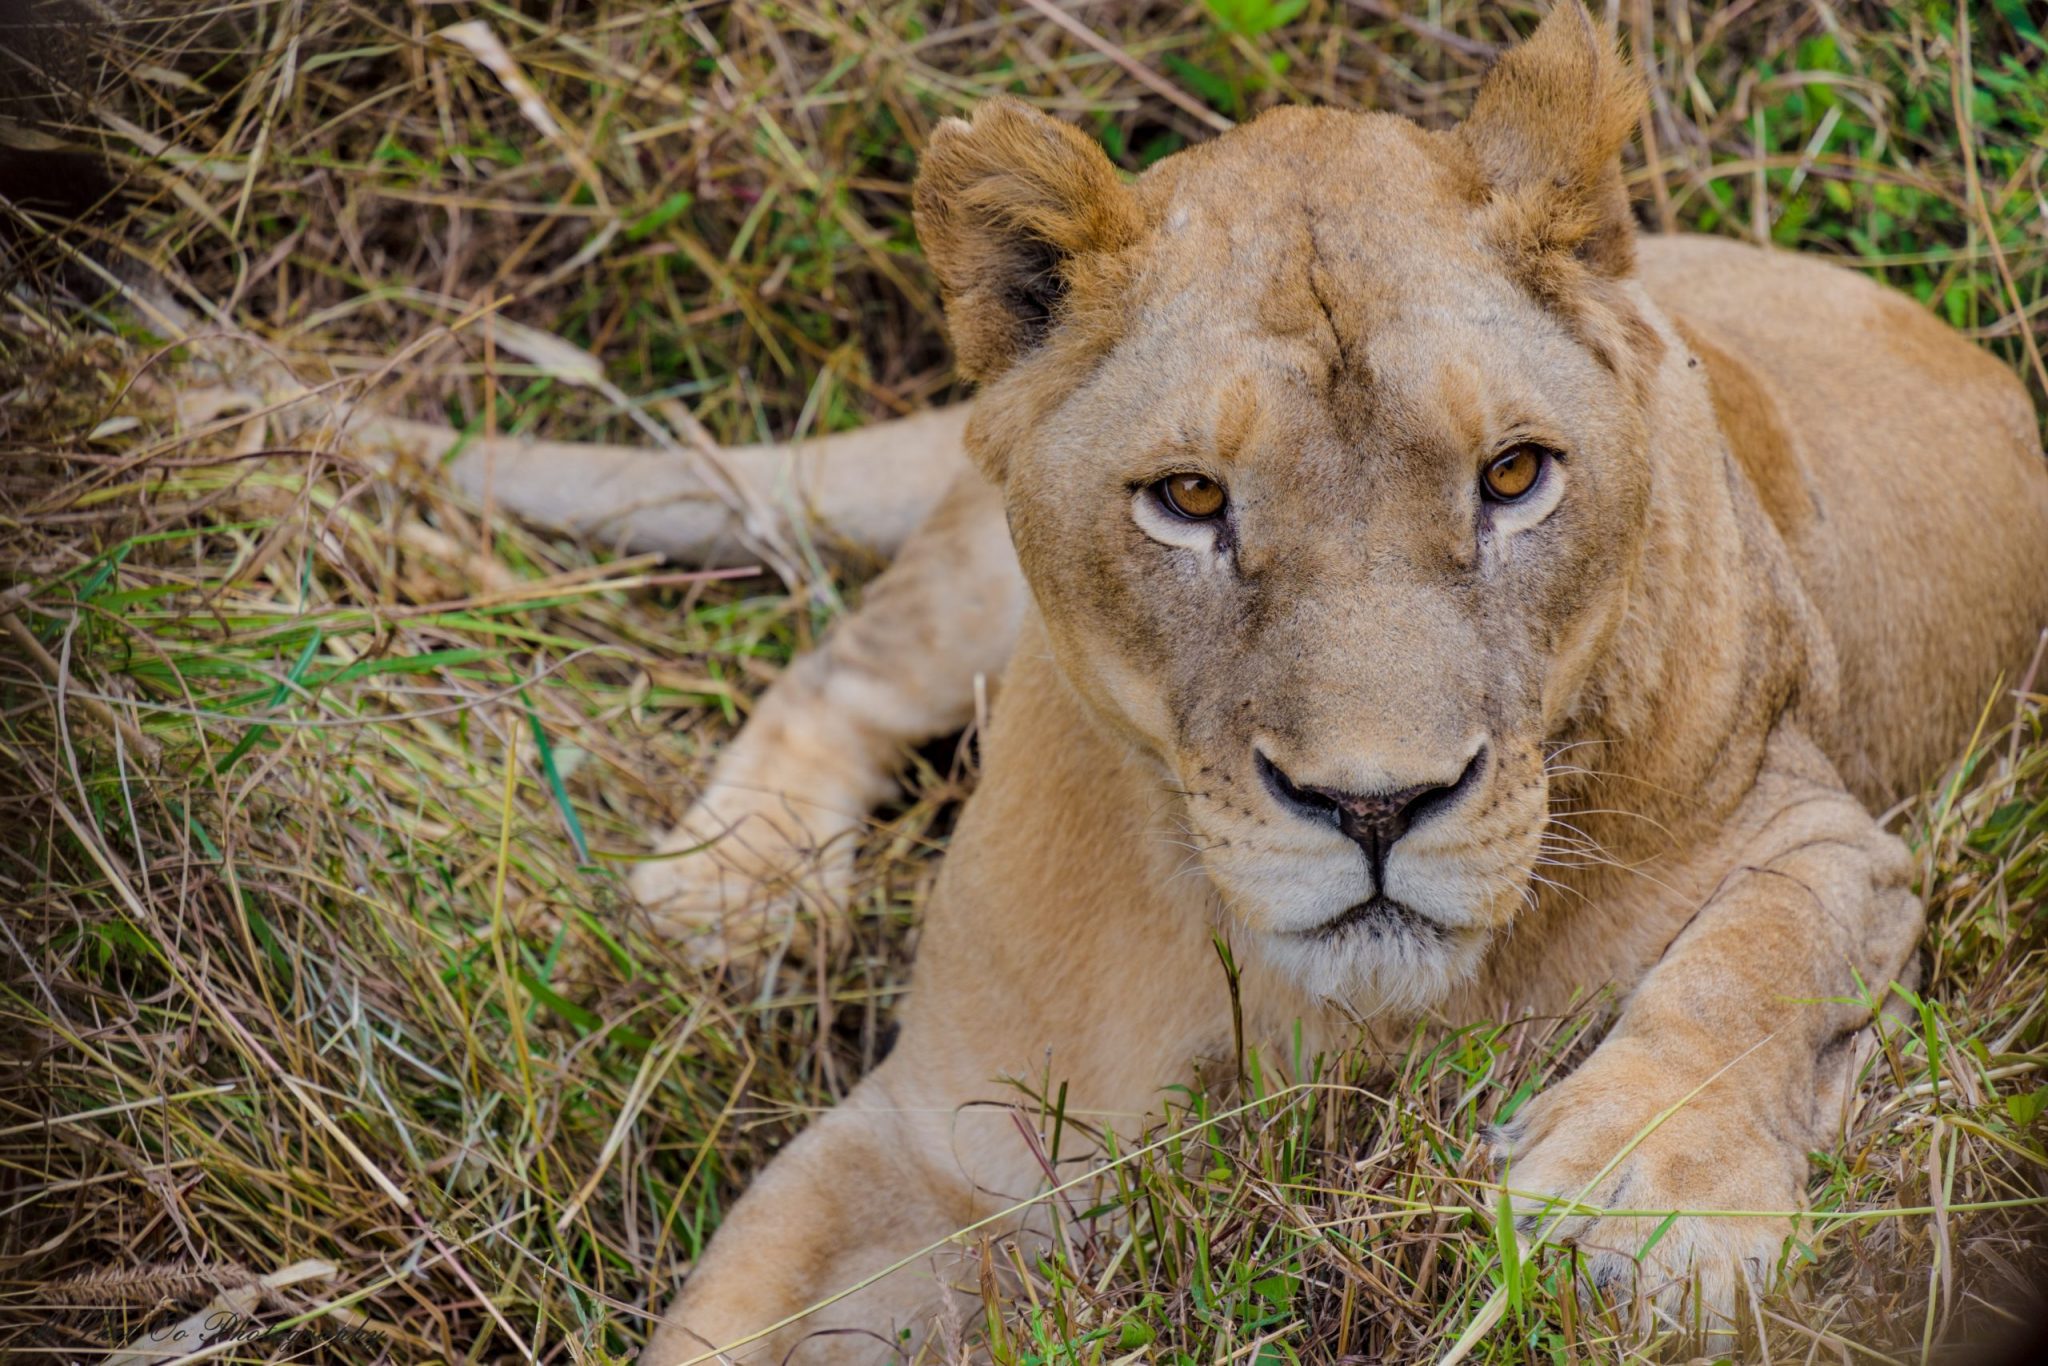 India: Two lionesses at Etawah safari park test positive for coronavirus